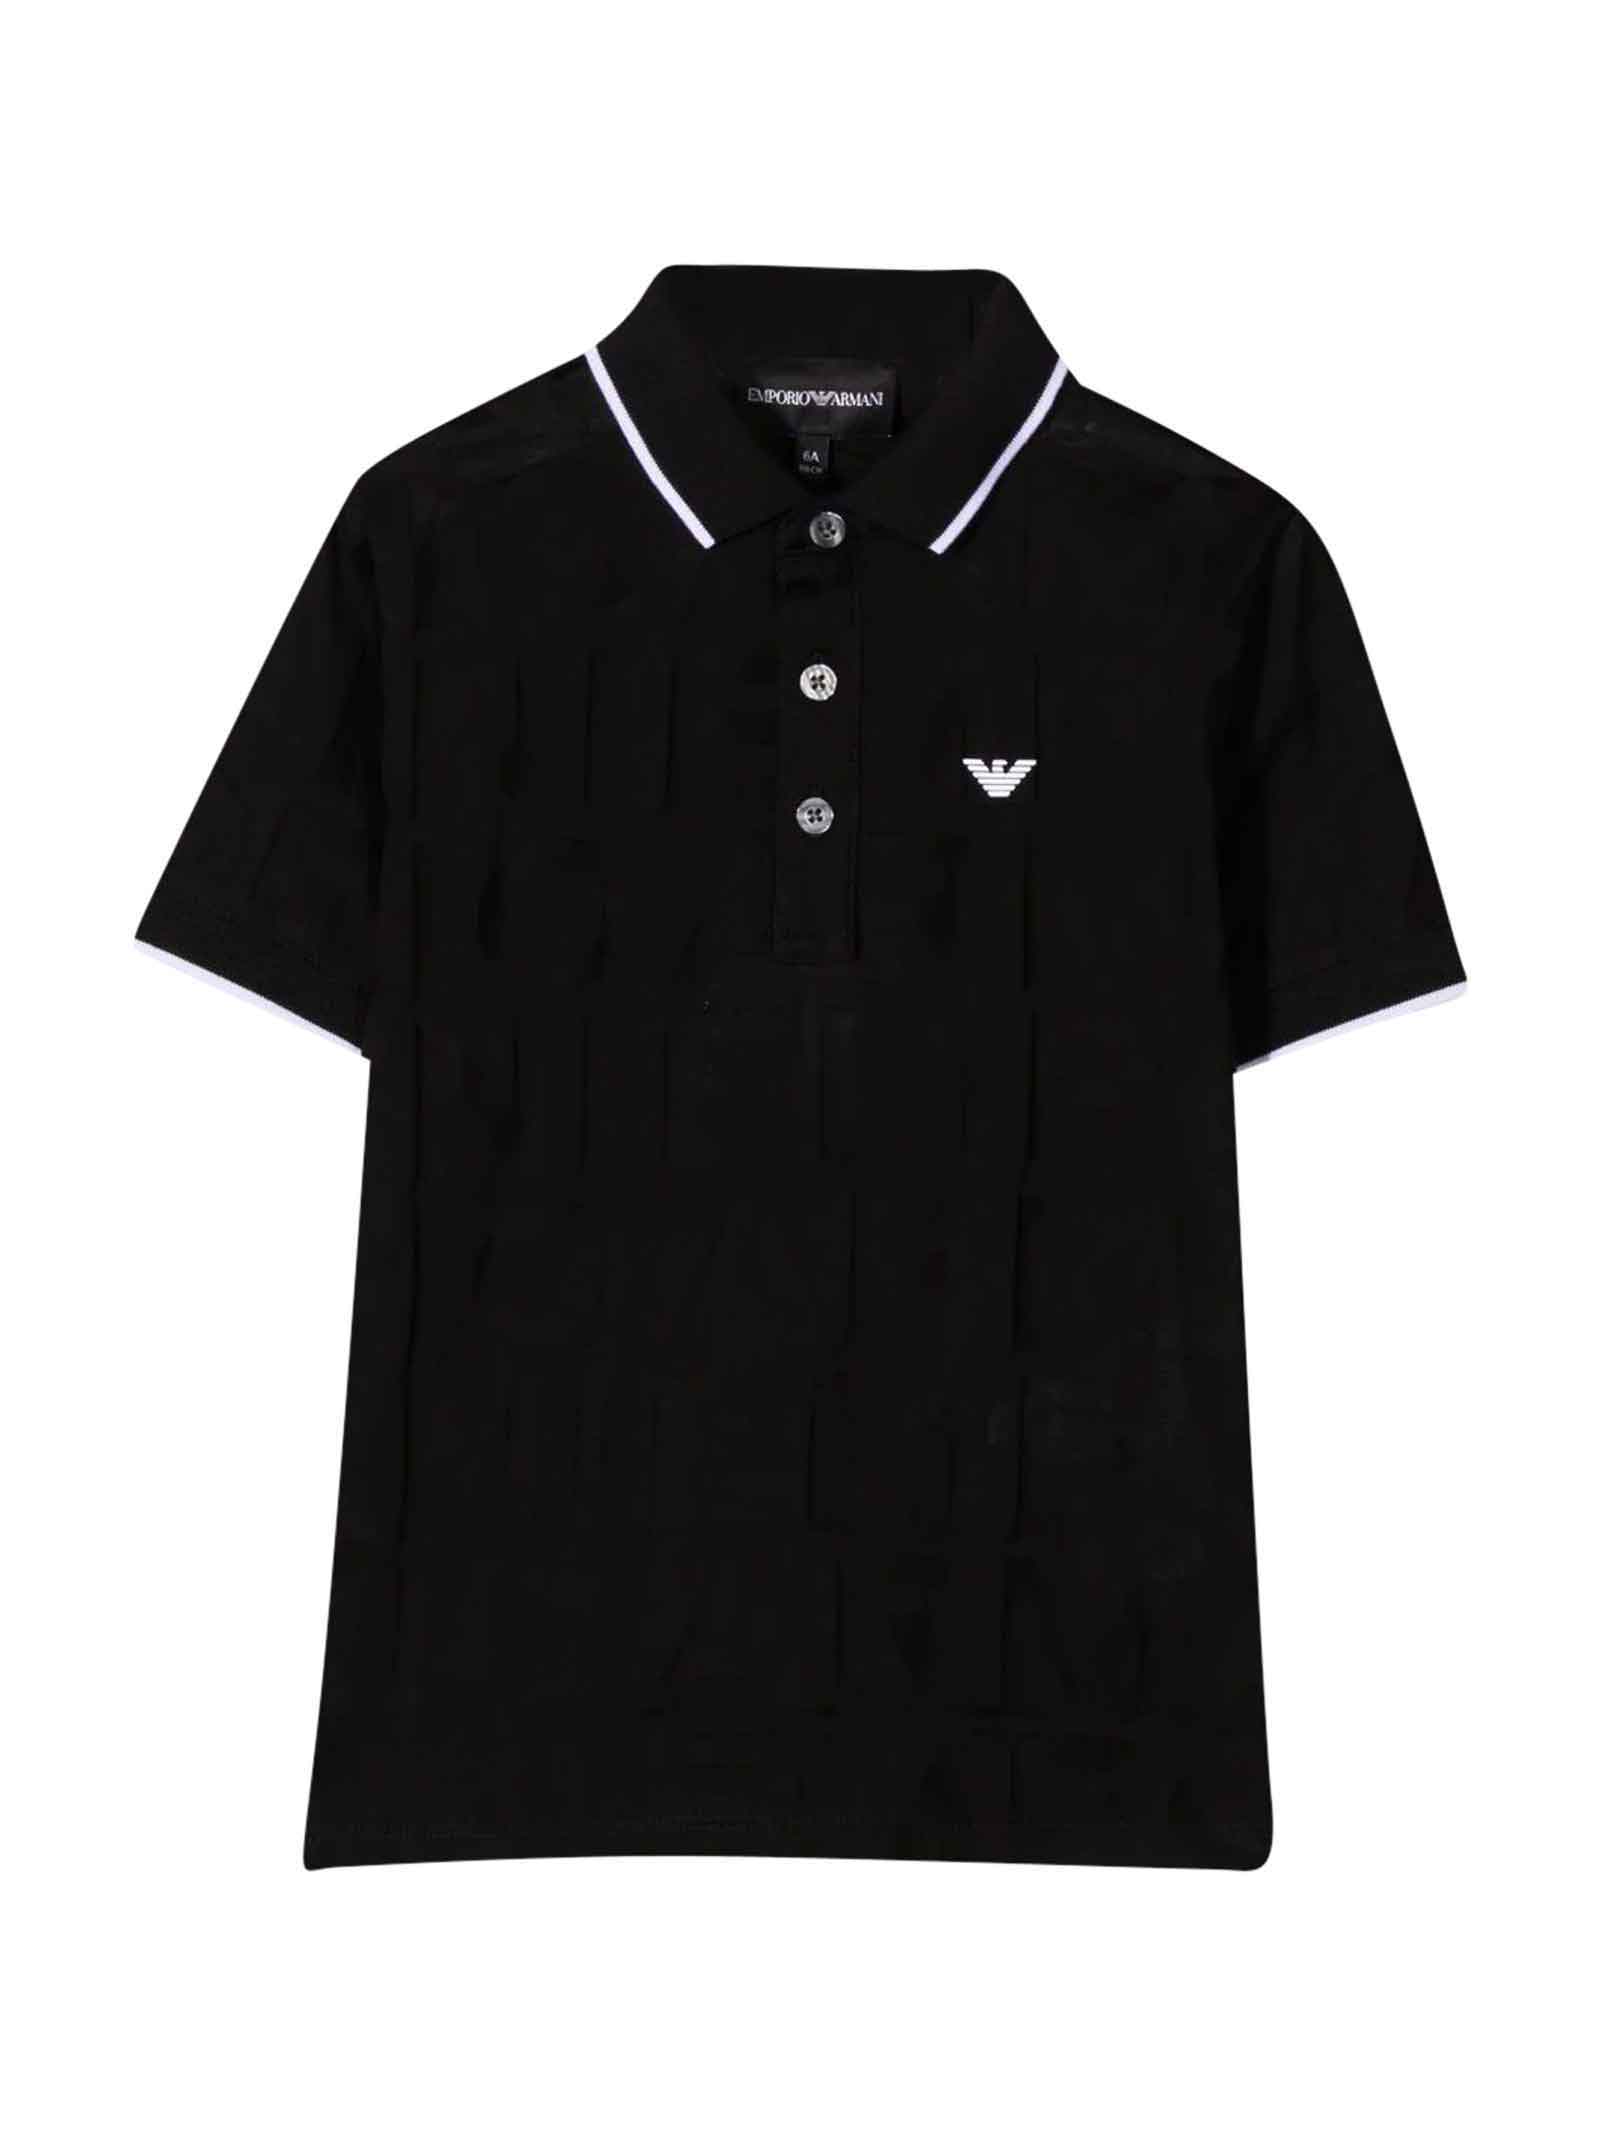 Emporio Armani Black Polo Shirt With Frontal Logo Application, Straight Hem And Short Sleeve